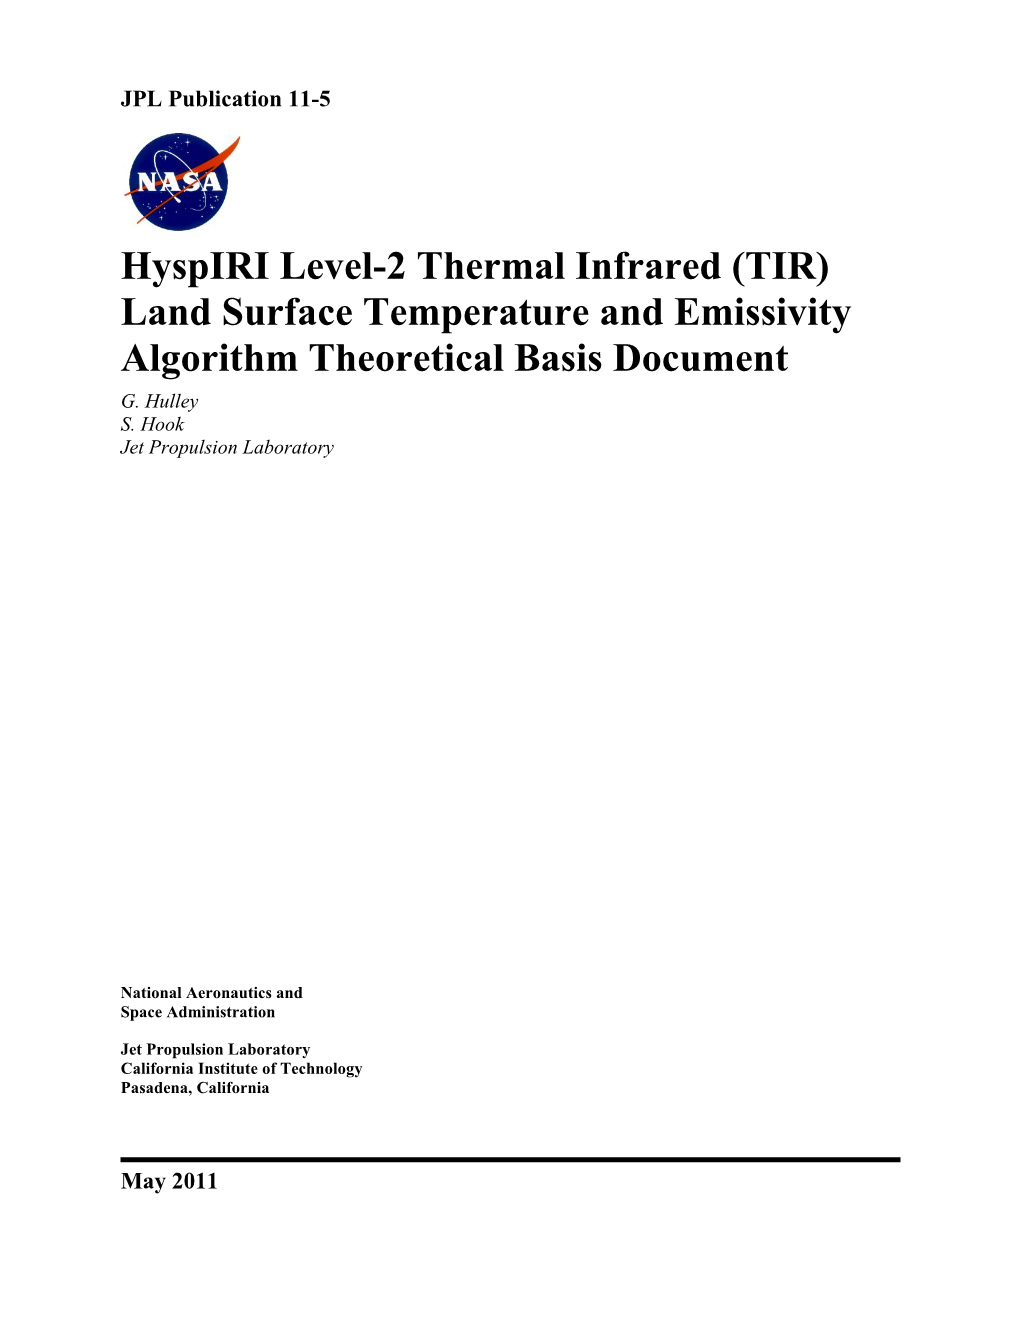 TIR Level 2 Surface Temperature and Emissivity